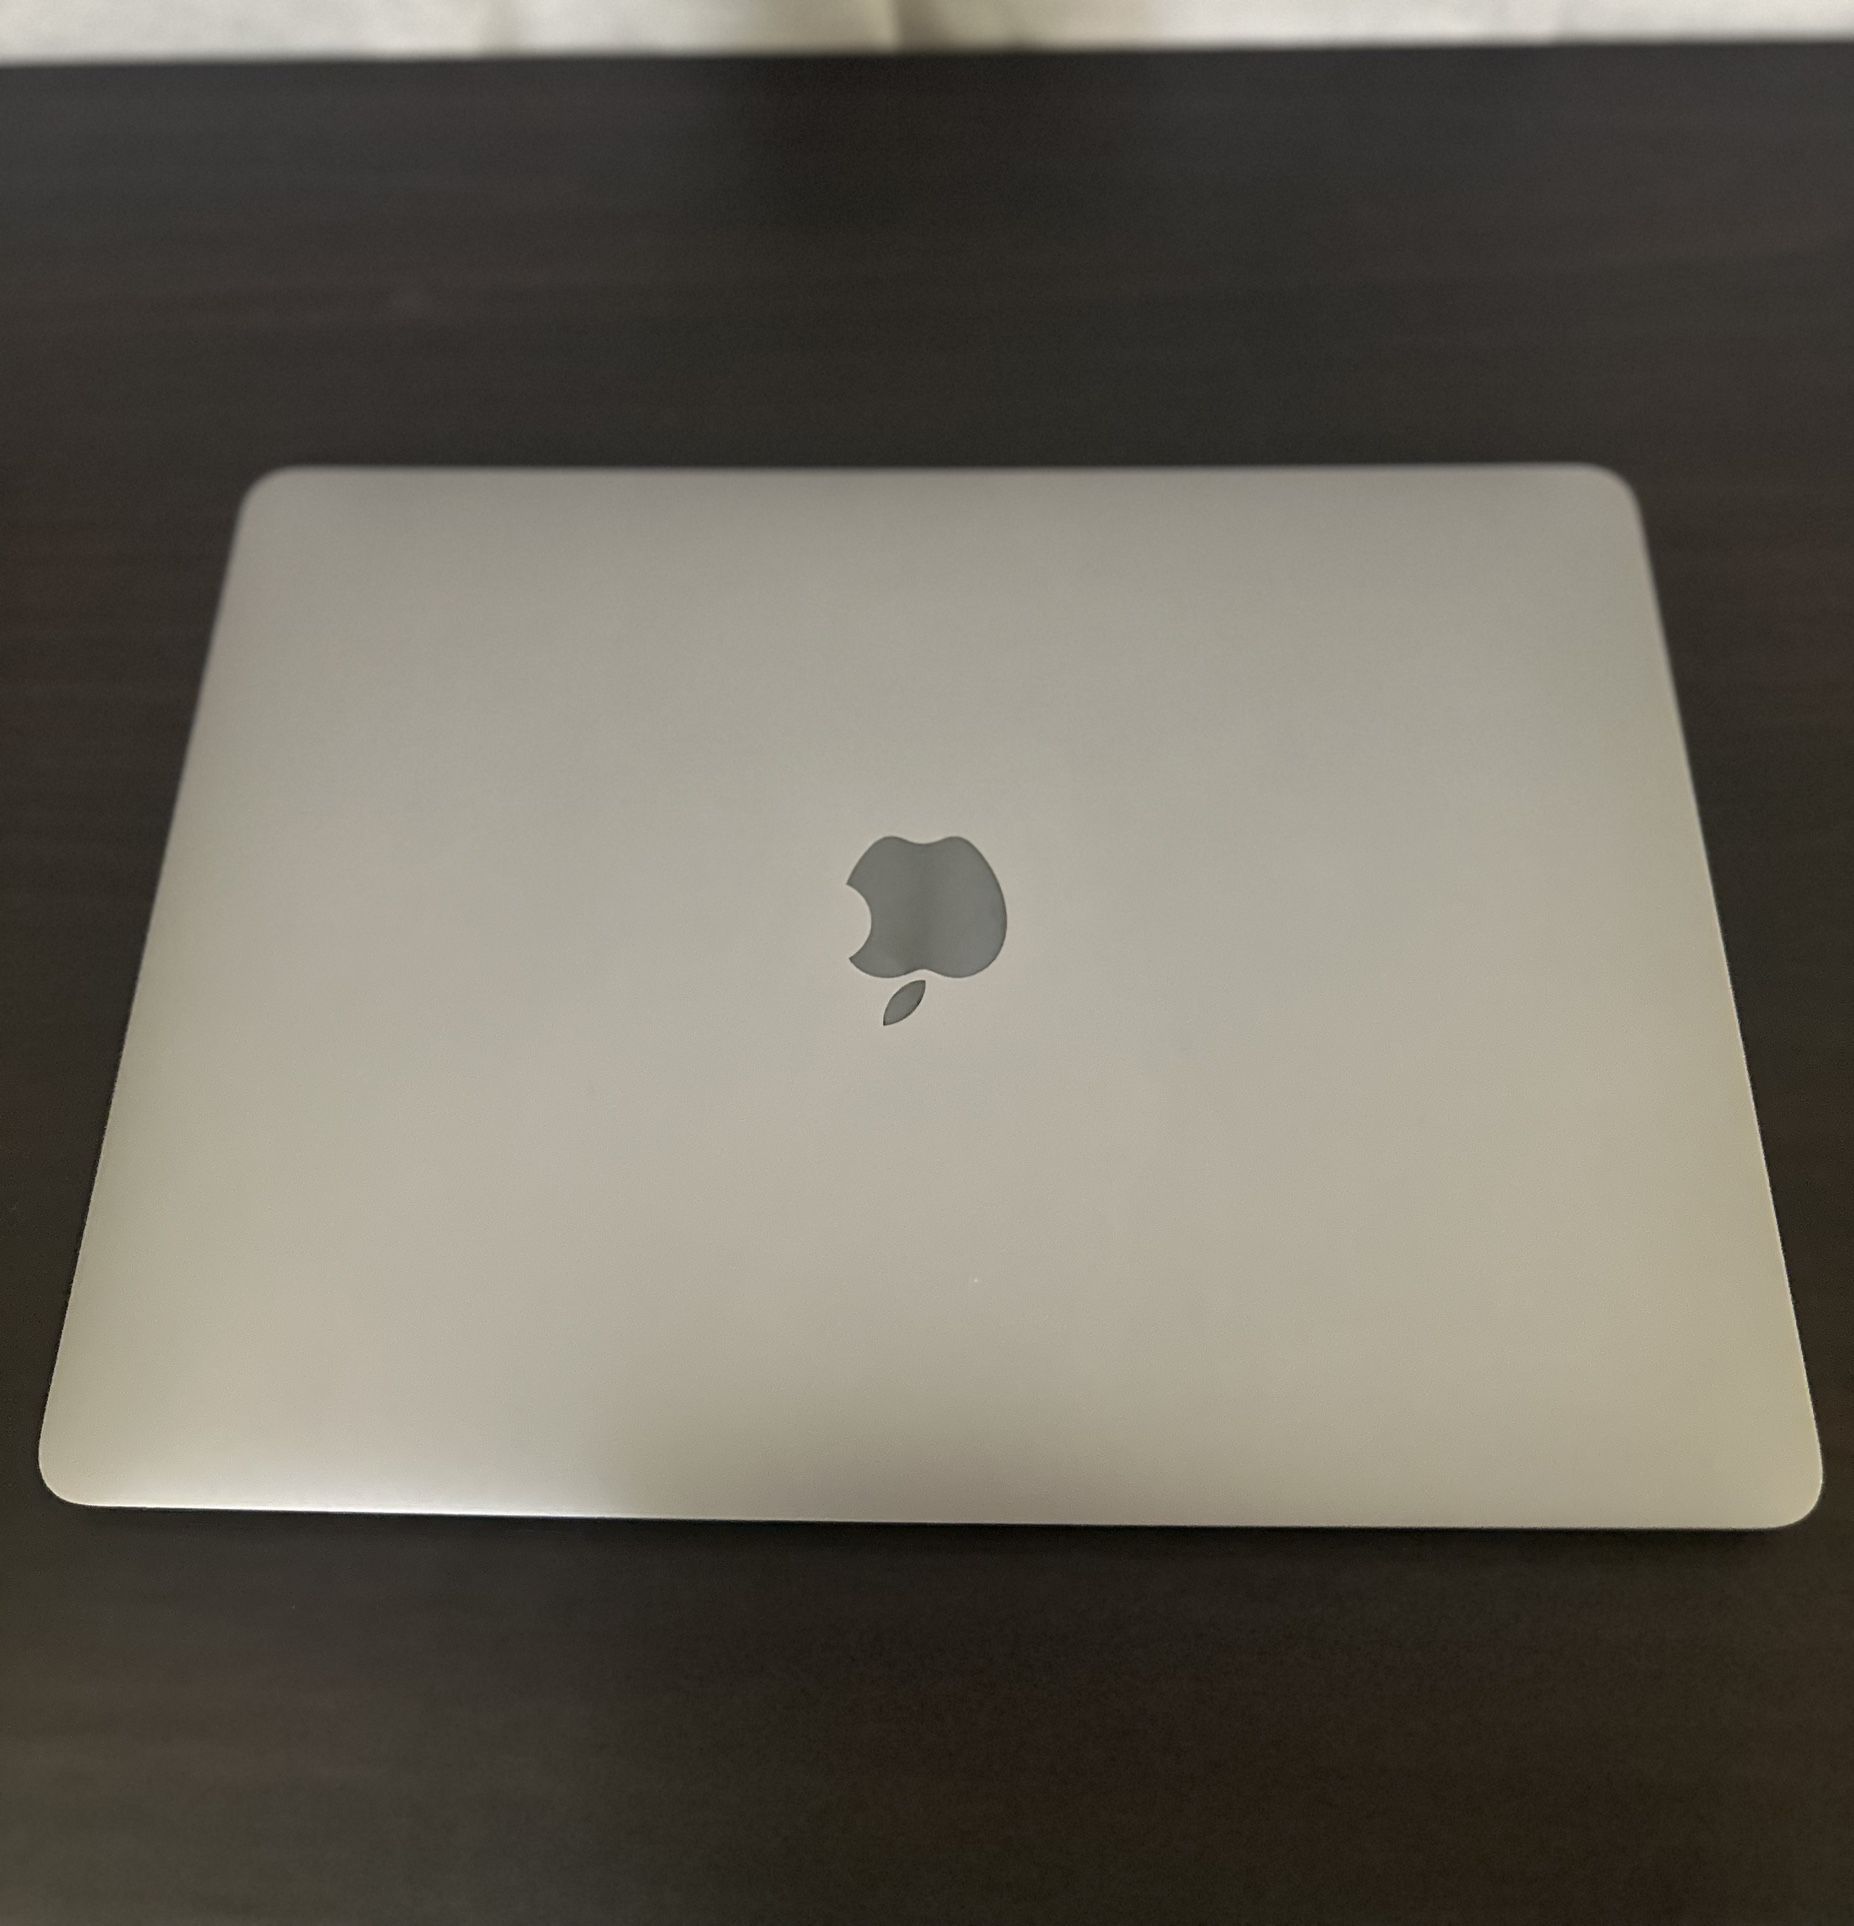 Apple MacBook Air 13.3in 2019 - Intel Core i5 1.6GHz, 8GB RAM, 128GB SSD - Space Gray 